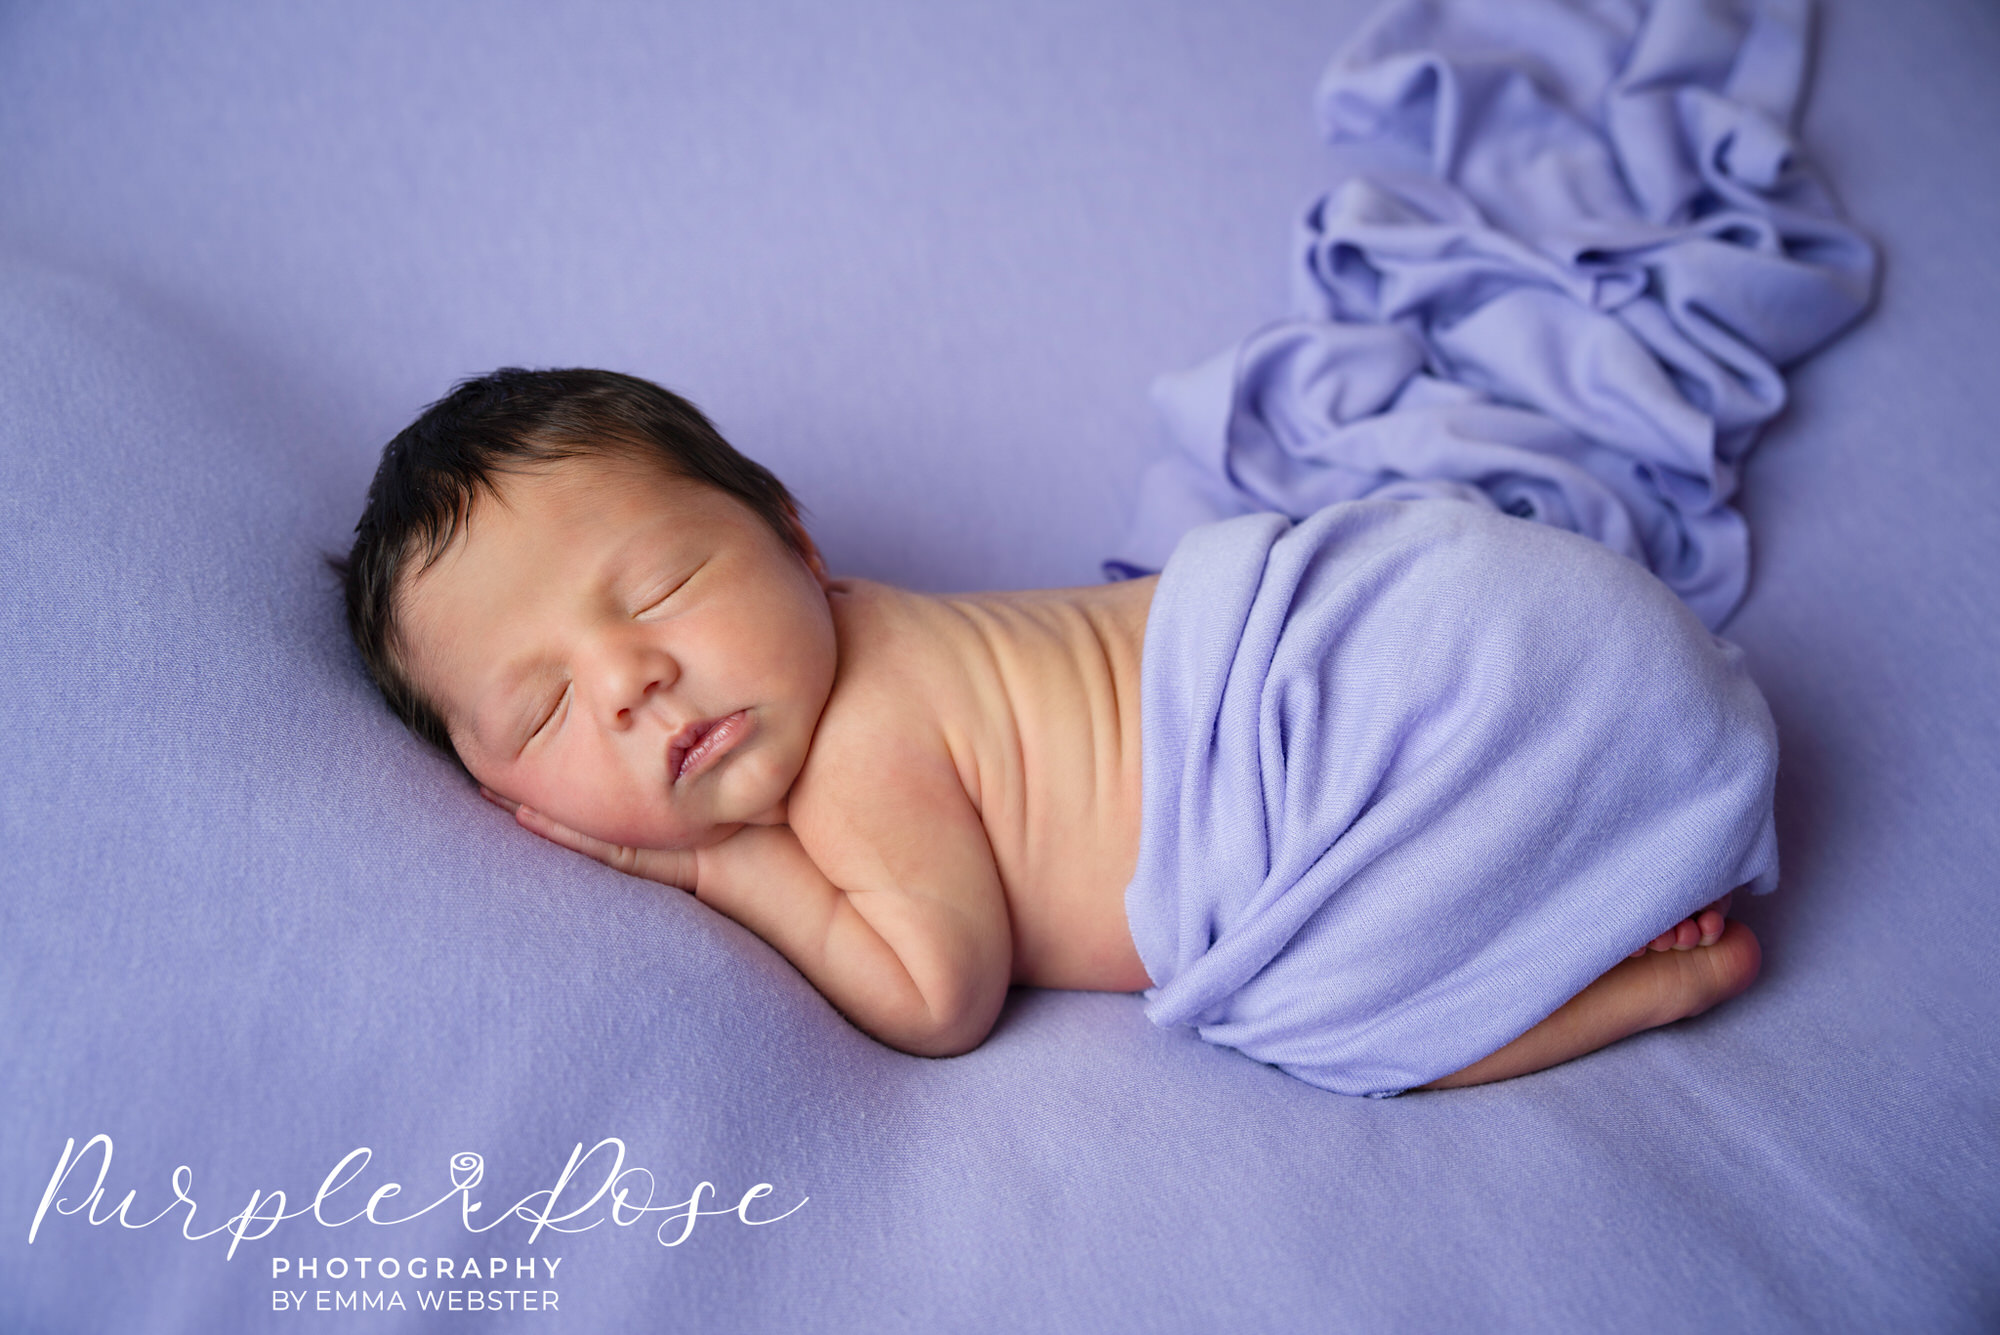 New born baby sleeping on a purple blanket